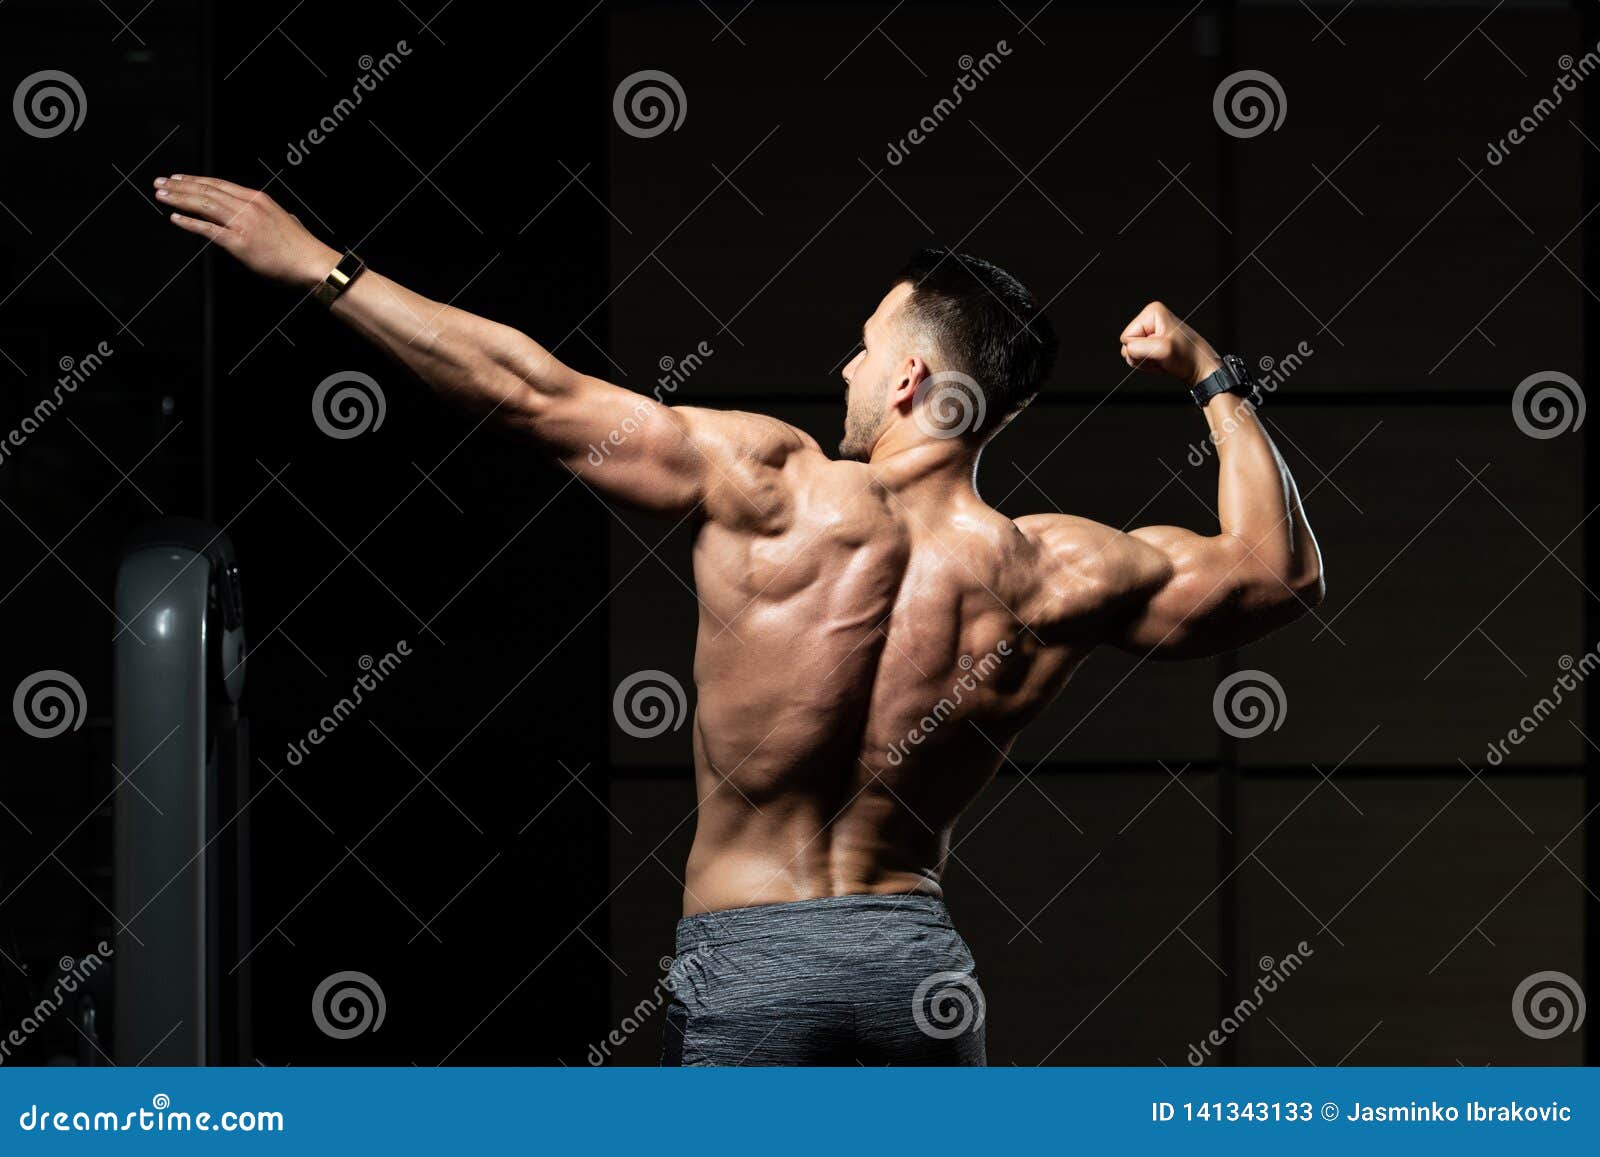 Bodybuilding Back Poses